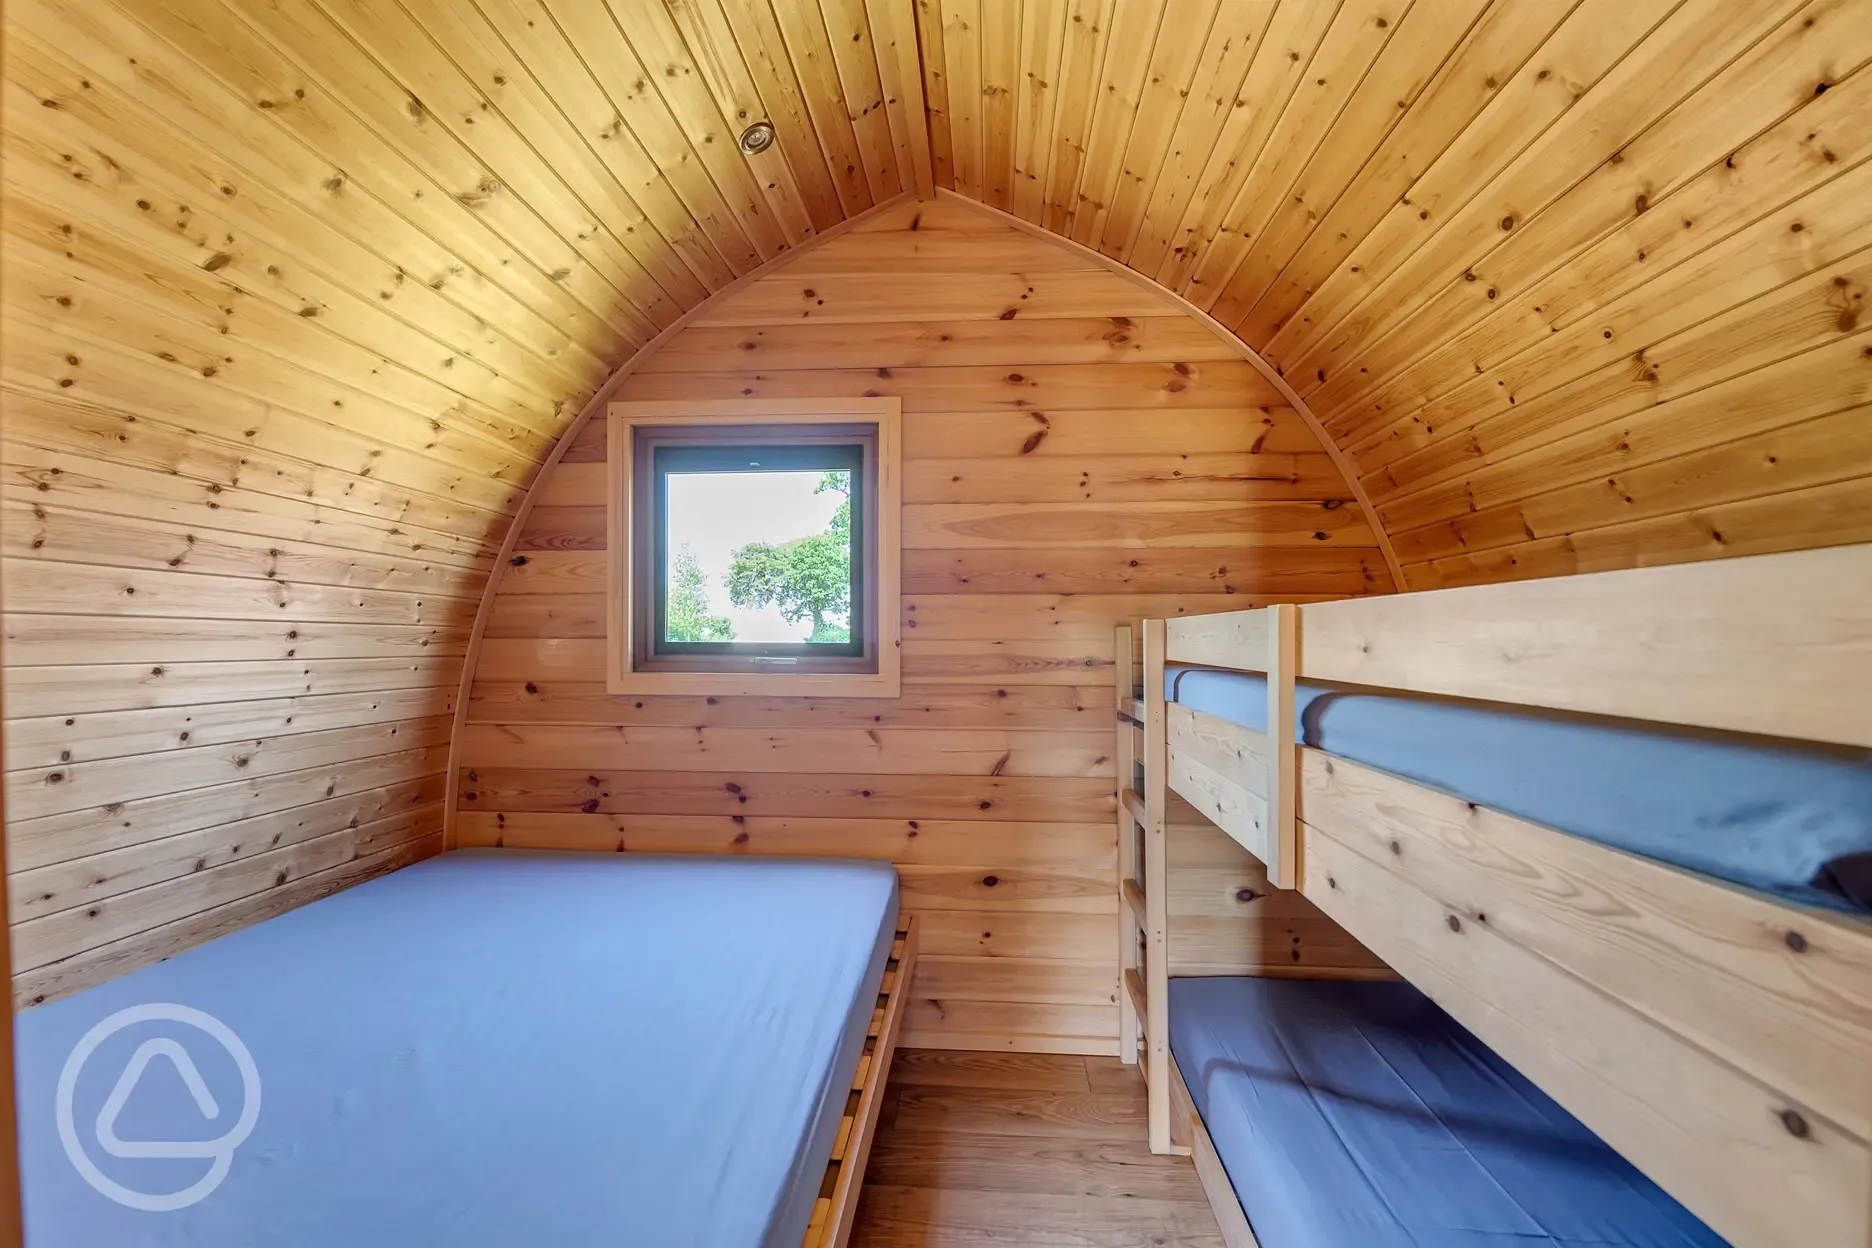 Cosy Family Pod Bunk bed interior